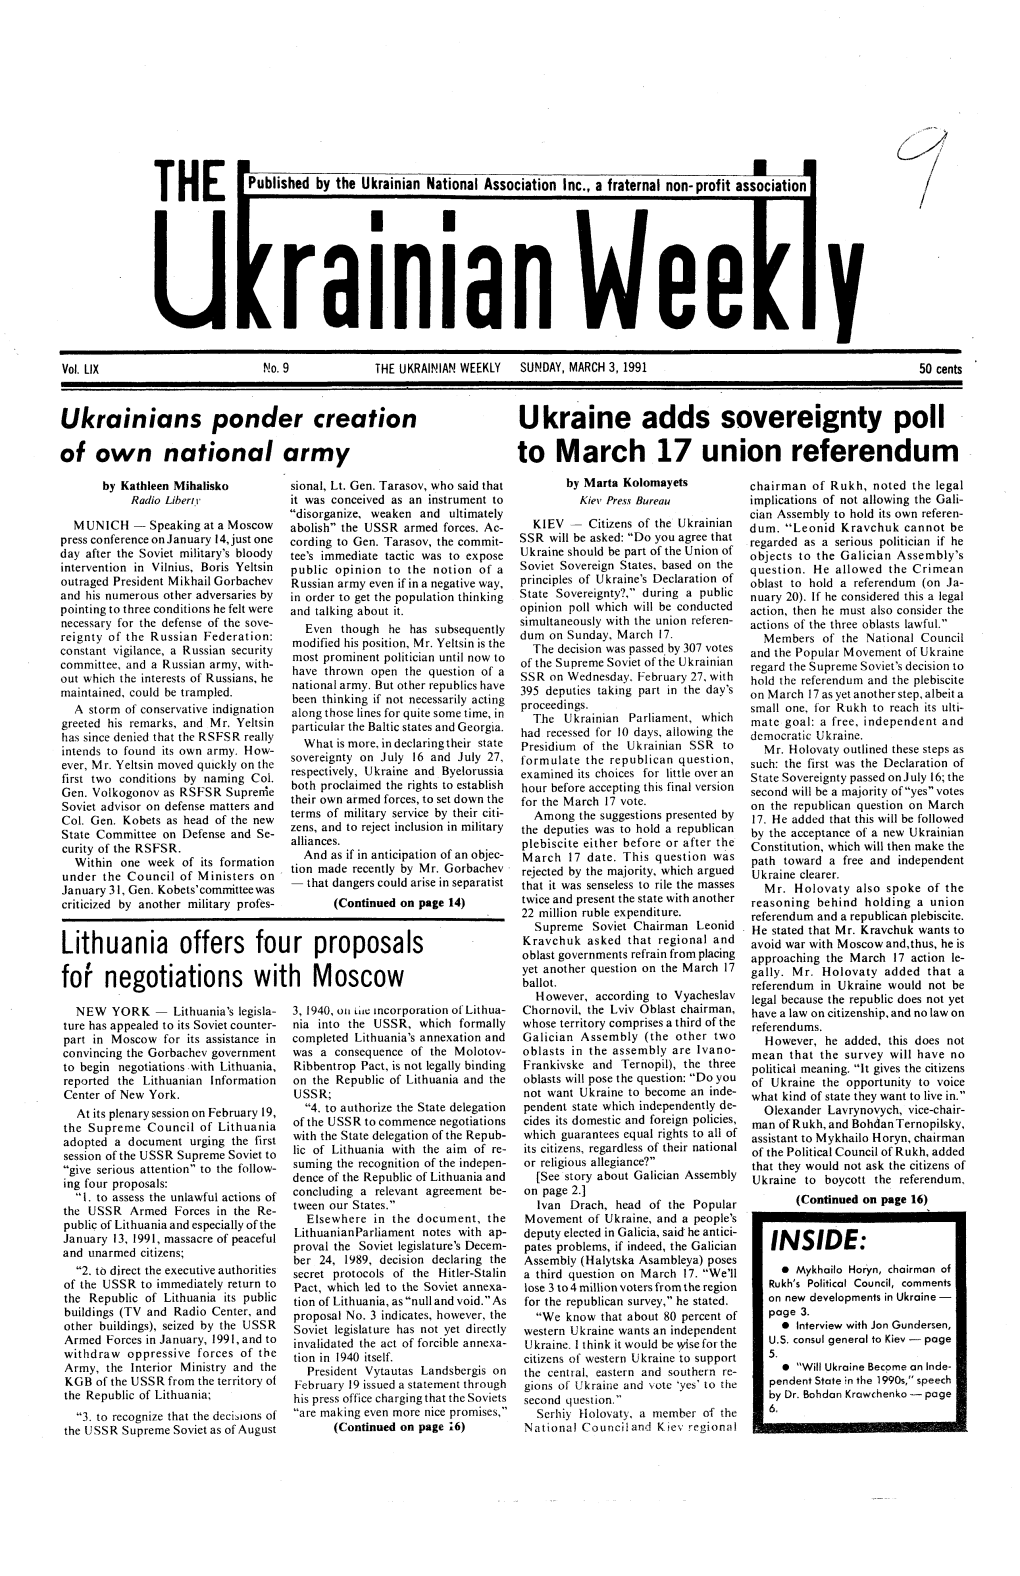 The Ukrainian Weekly 1991, No.9